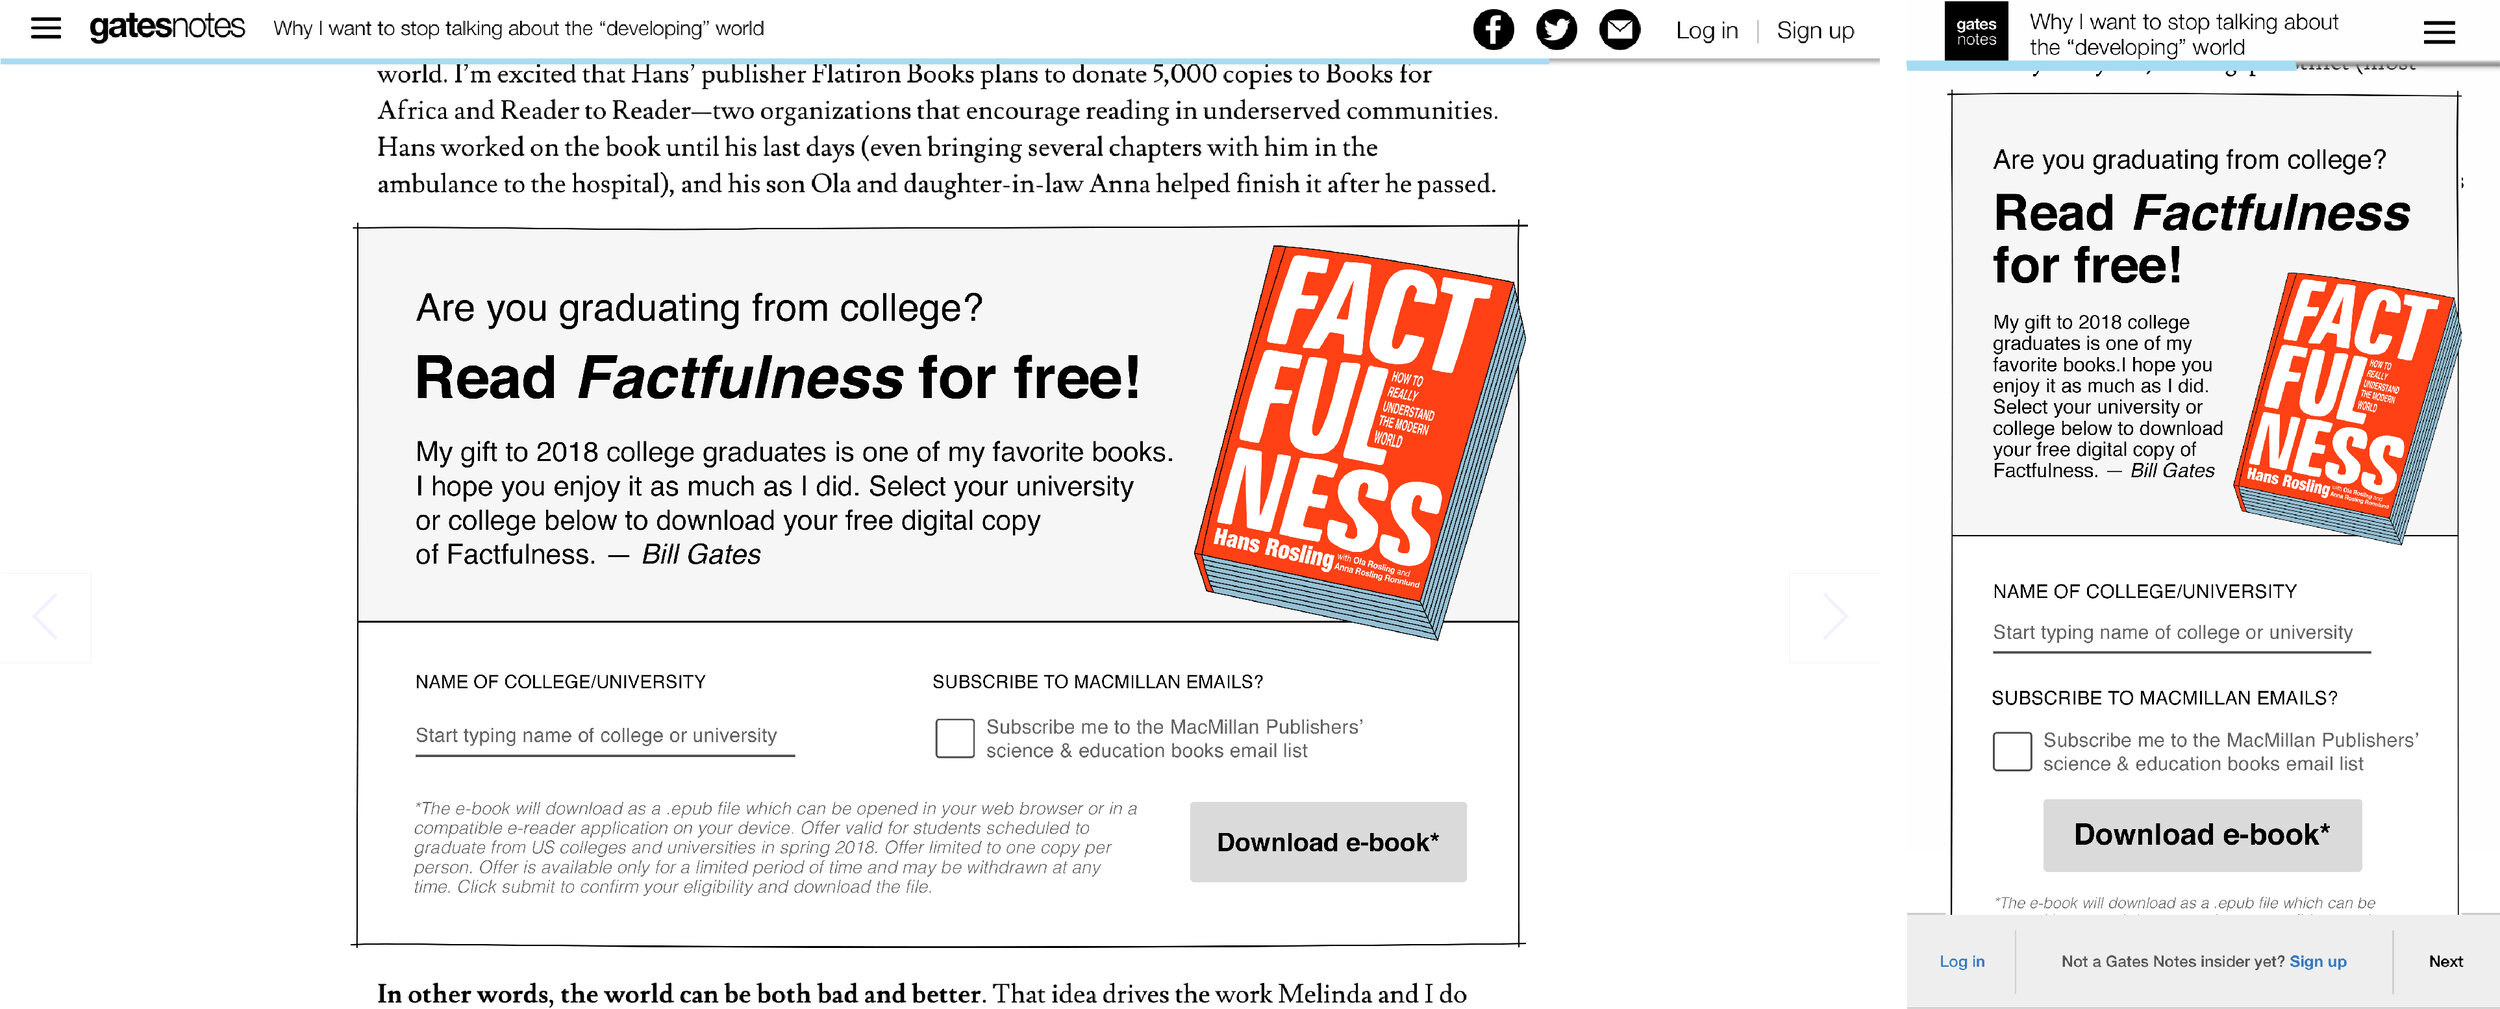 Factfulness-6 copy@3x-100.jpg